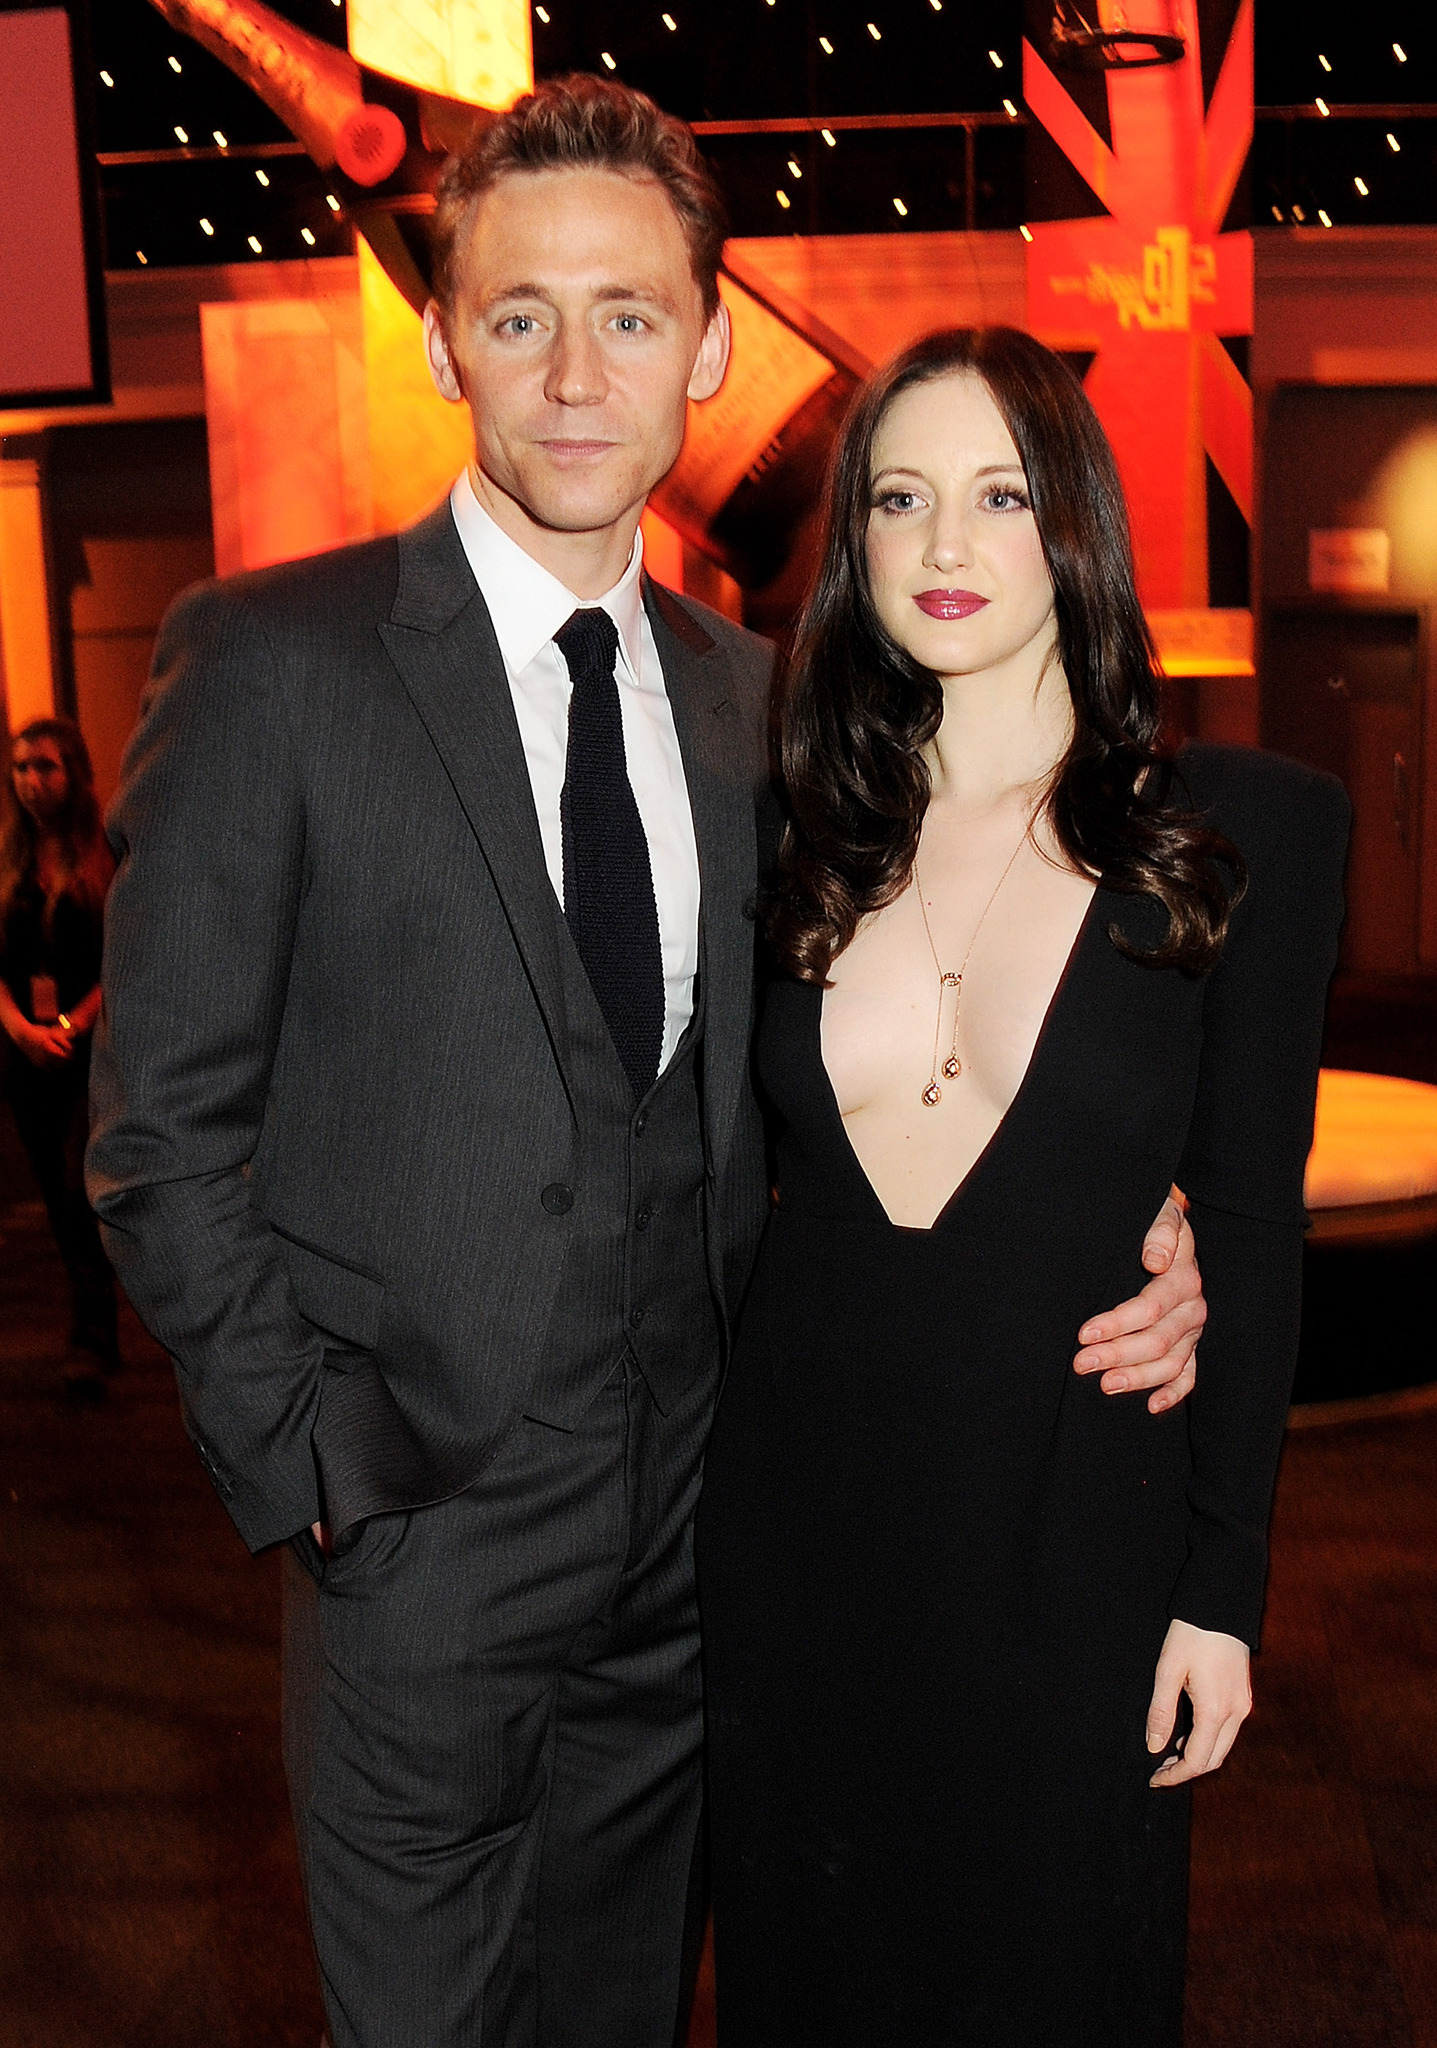 Tom Hiddleston and Andrea Riseborough